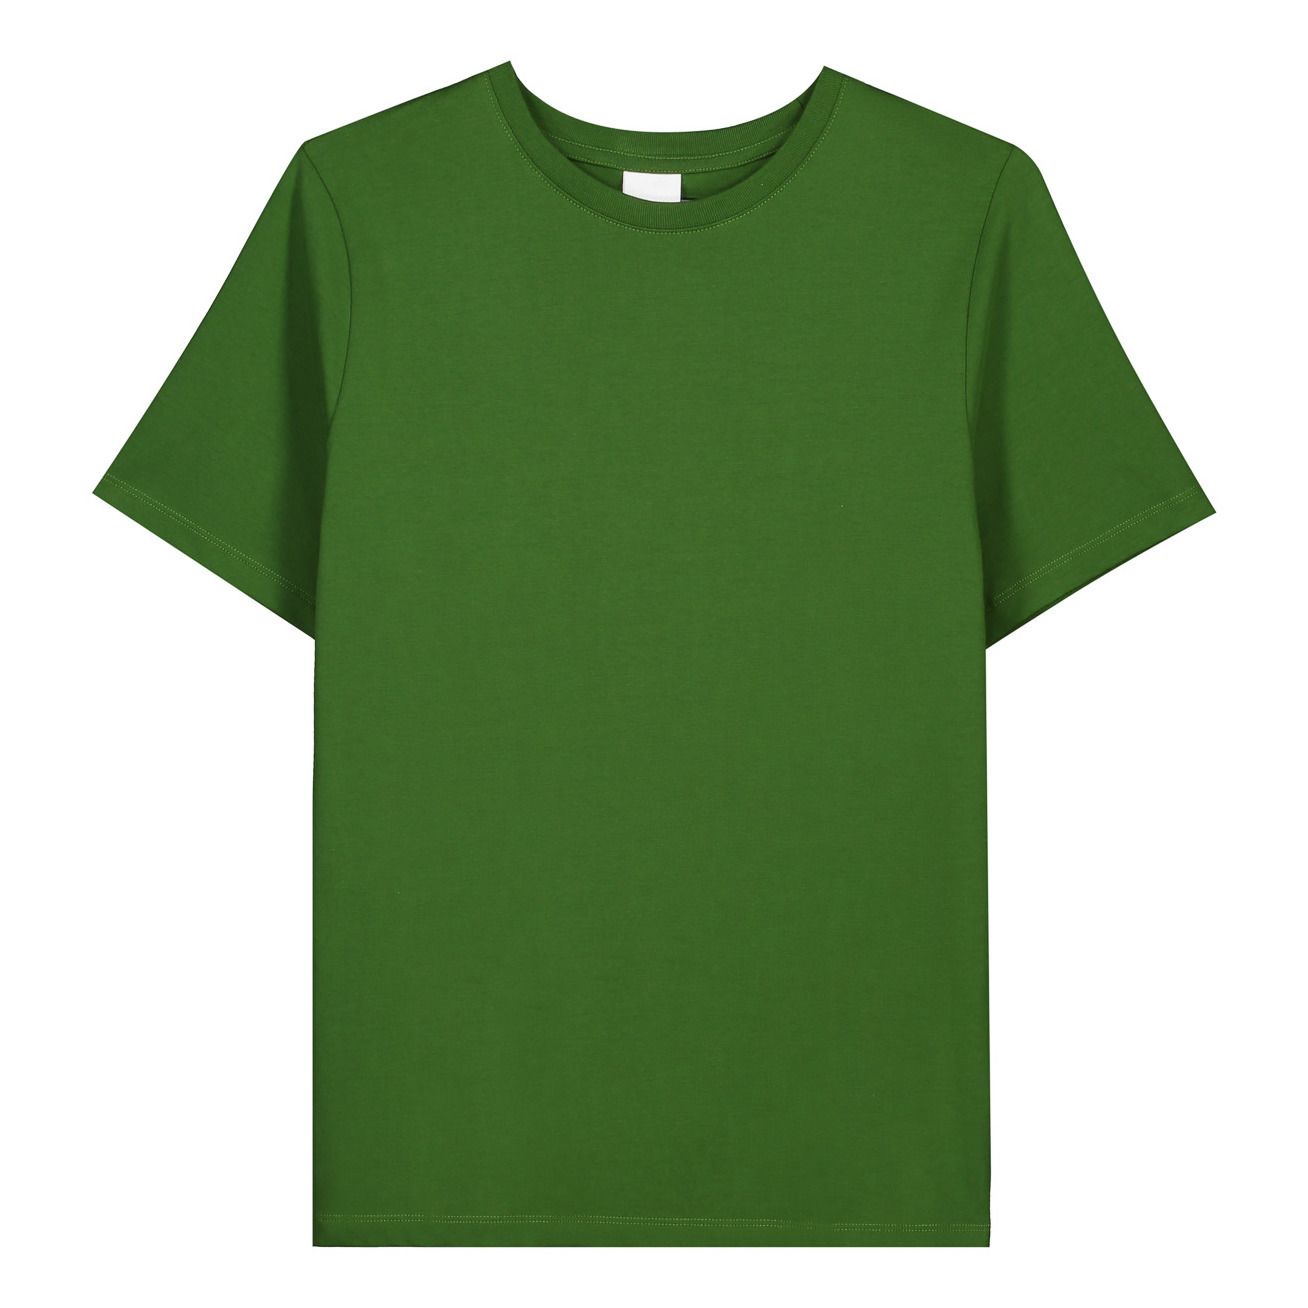 Kowtow - T-shirt Classic Coton Bio - Femme - Vert